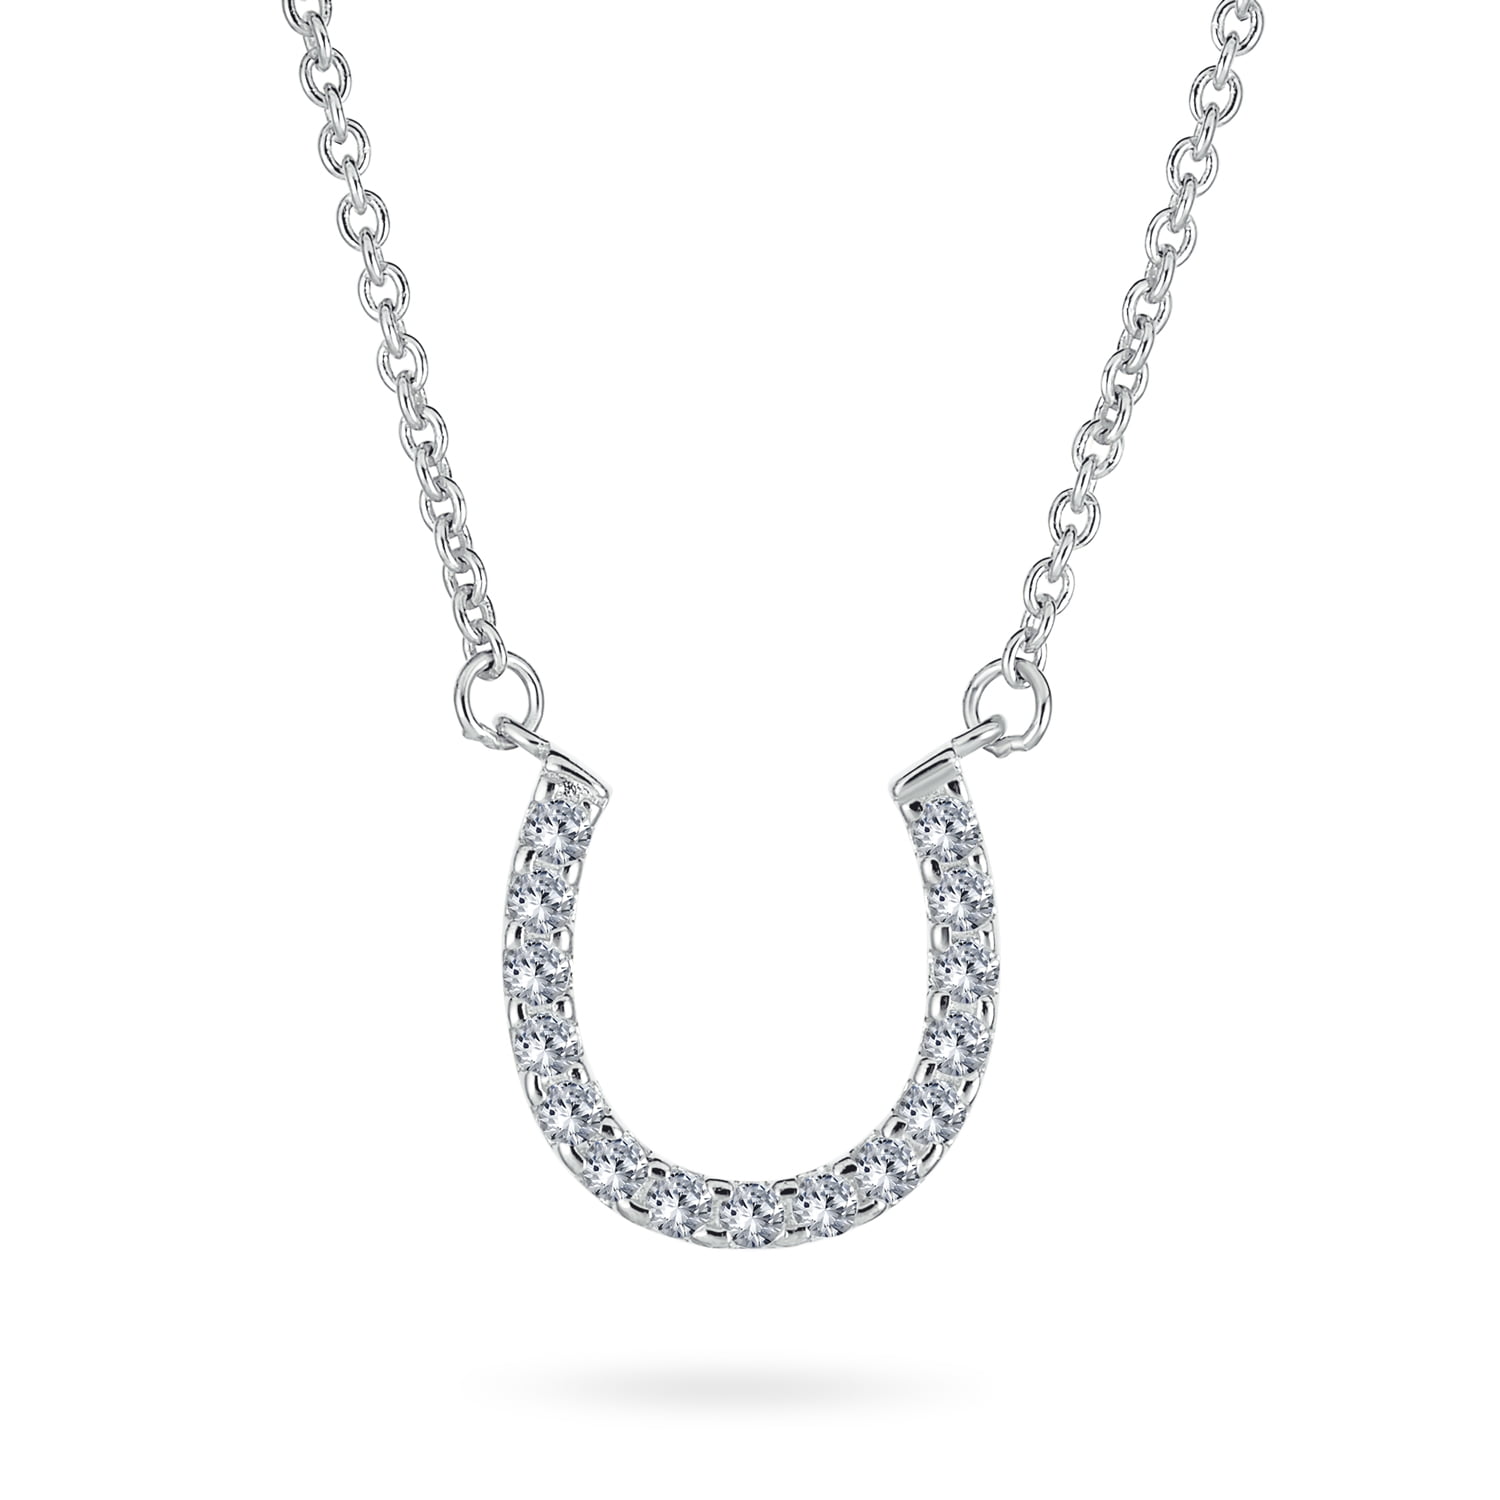 White Gold Horseshoe Necklace Sterling Silver - kellinsilver.com